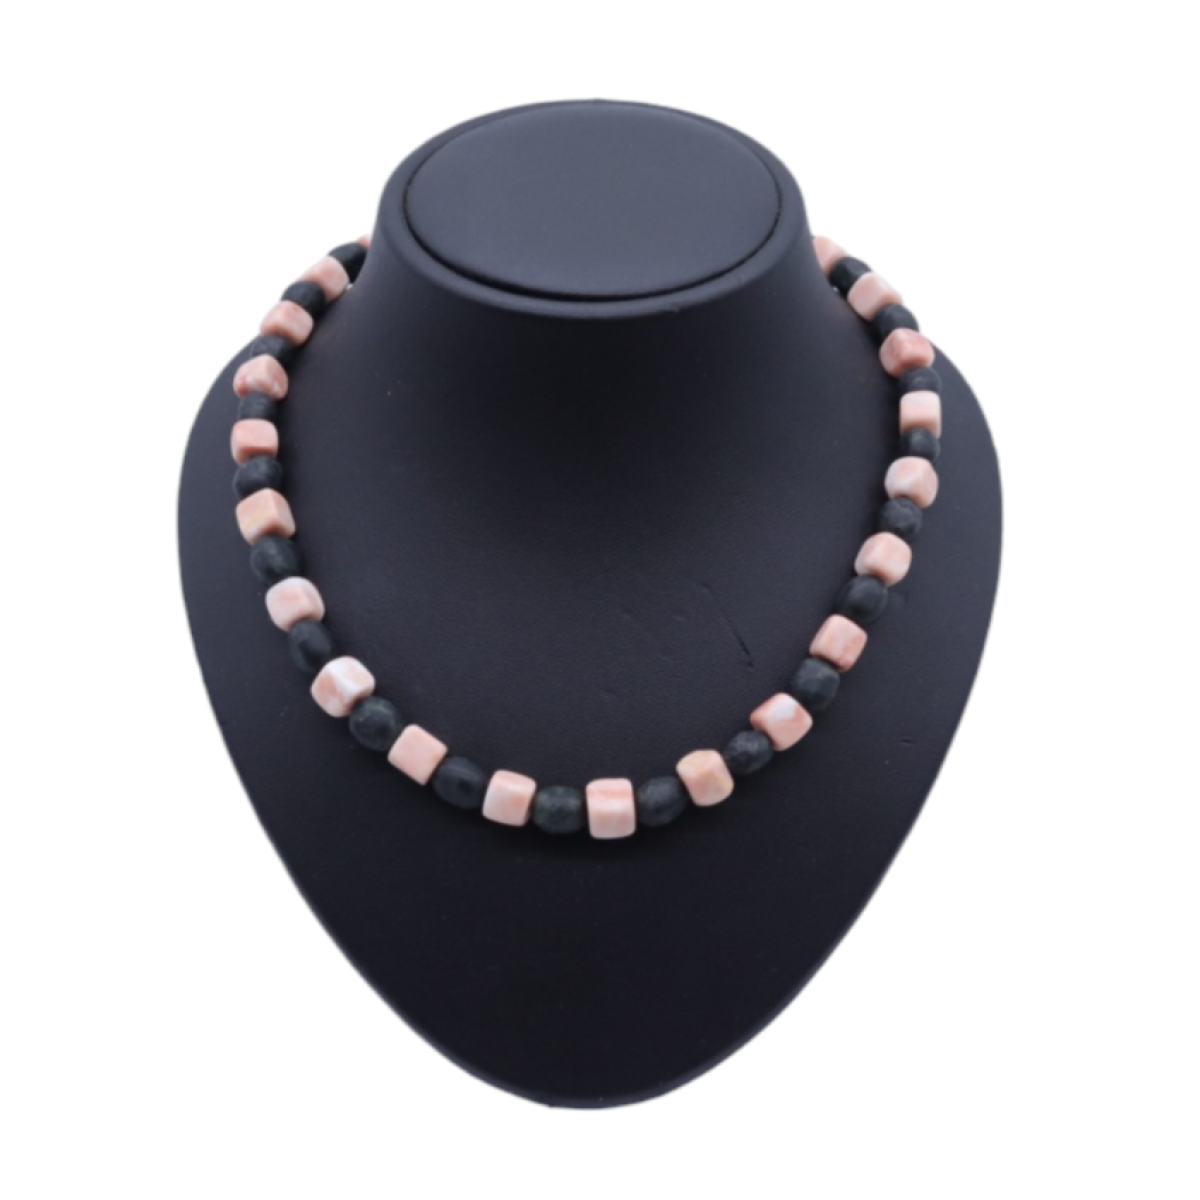 marmo-sassalbo-marble-serpentino-serpentine-collana-necklace